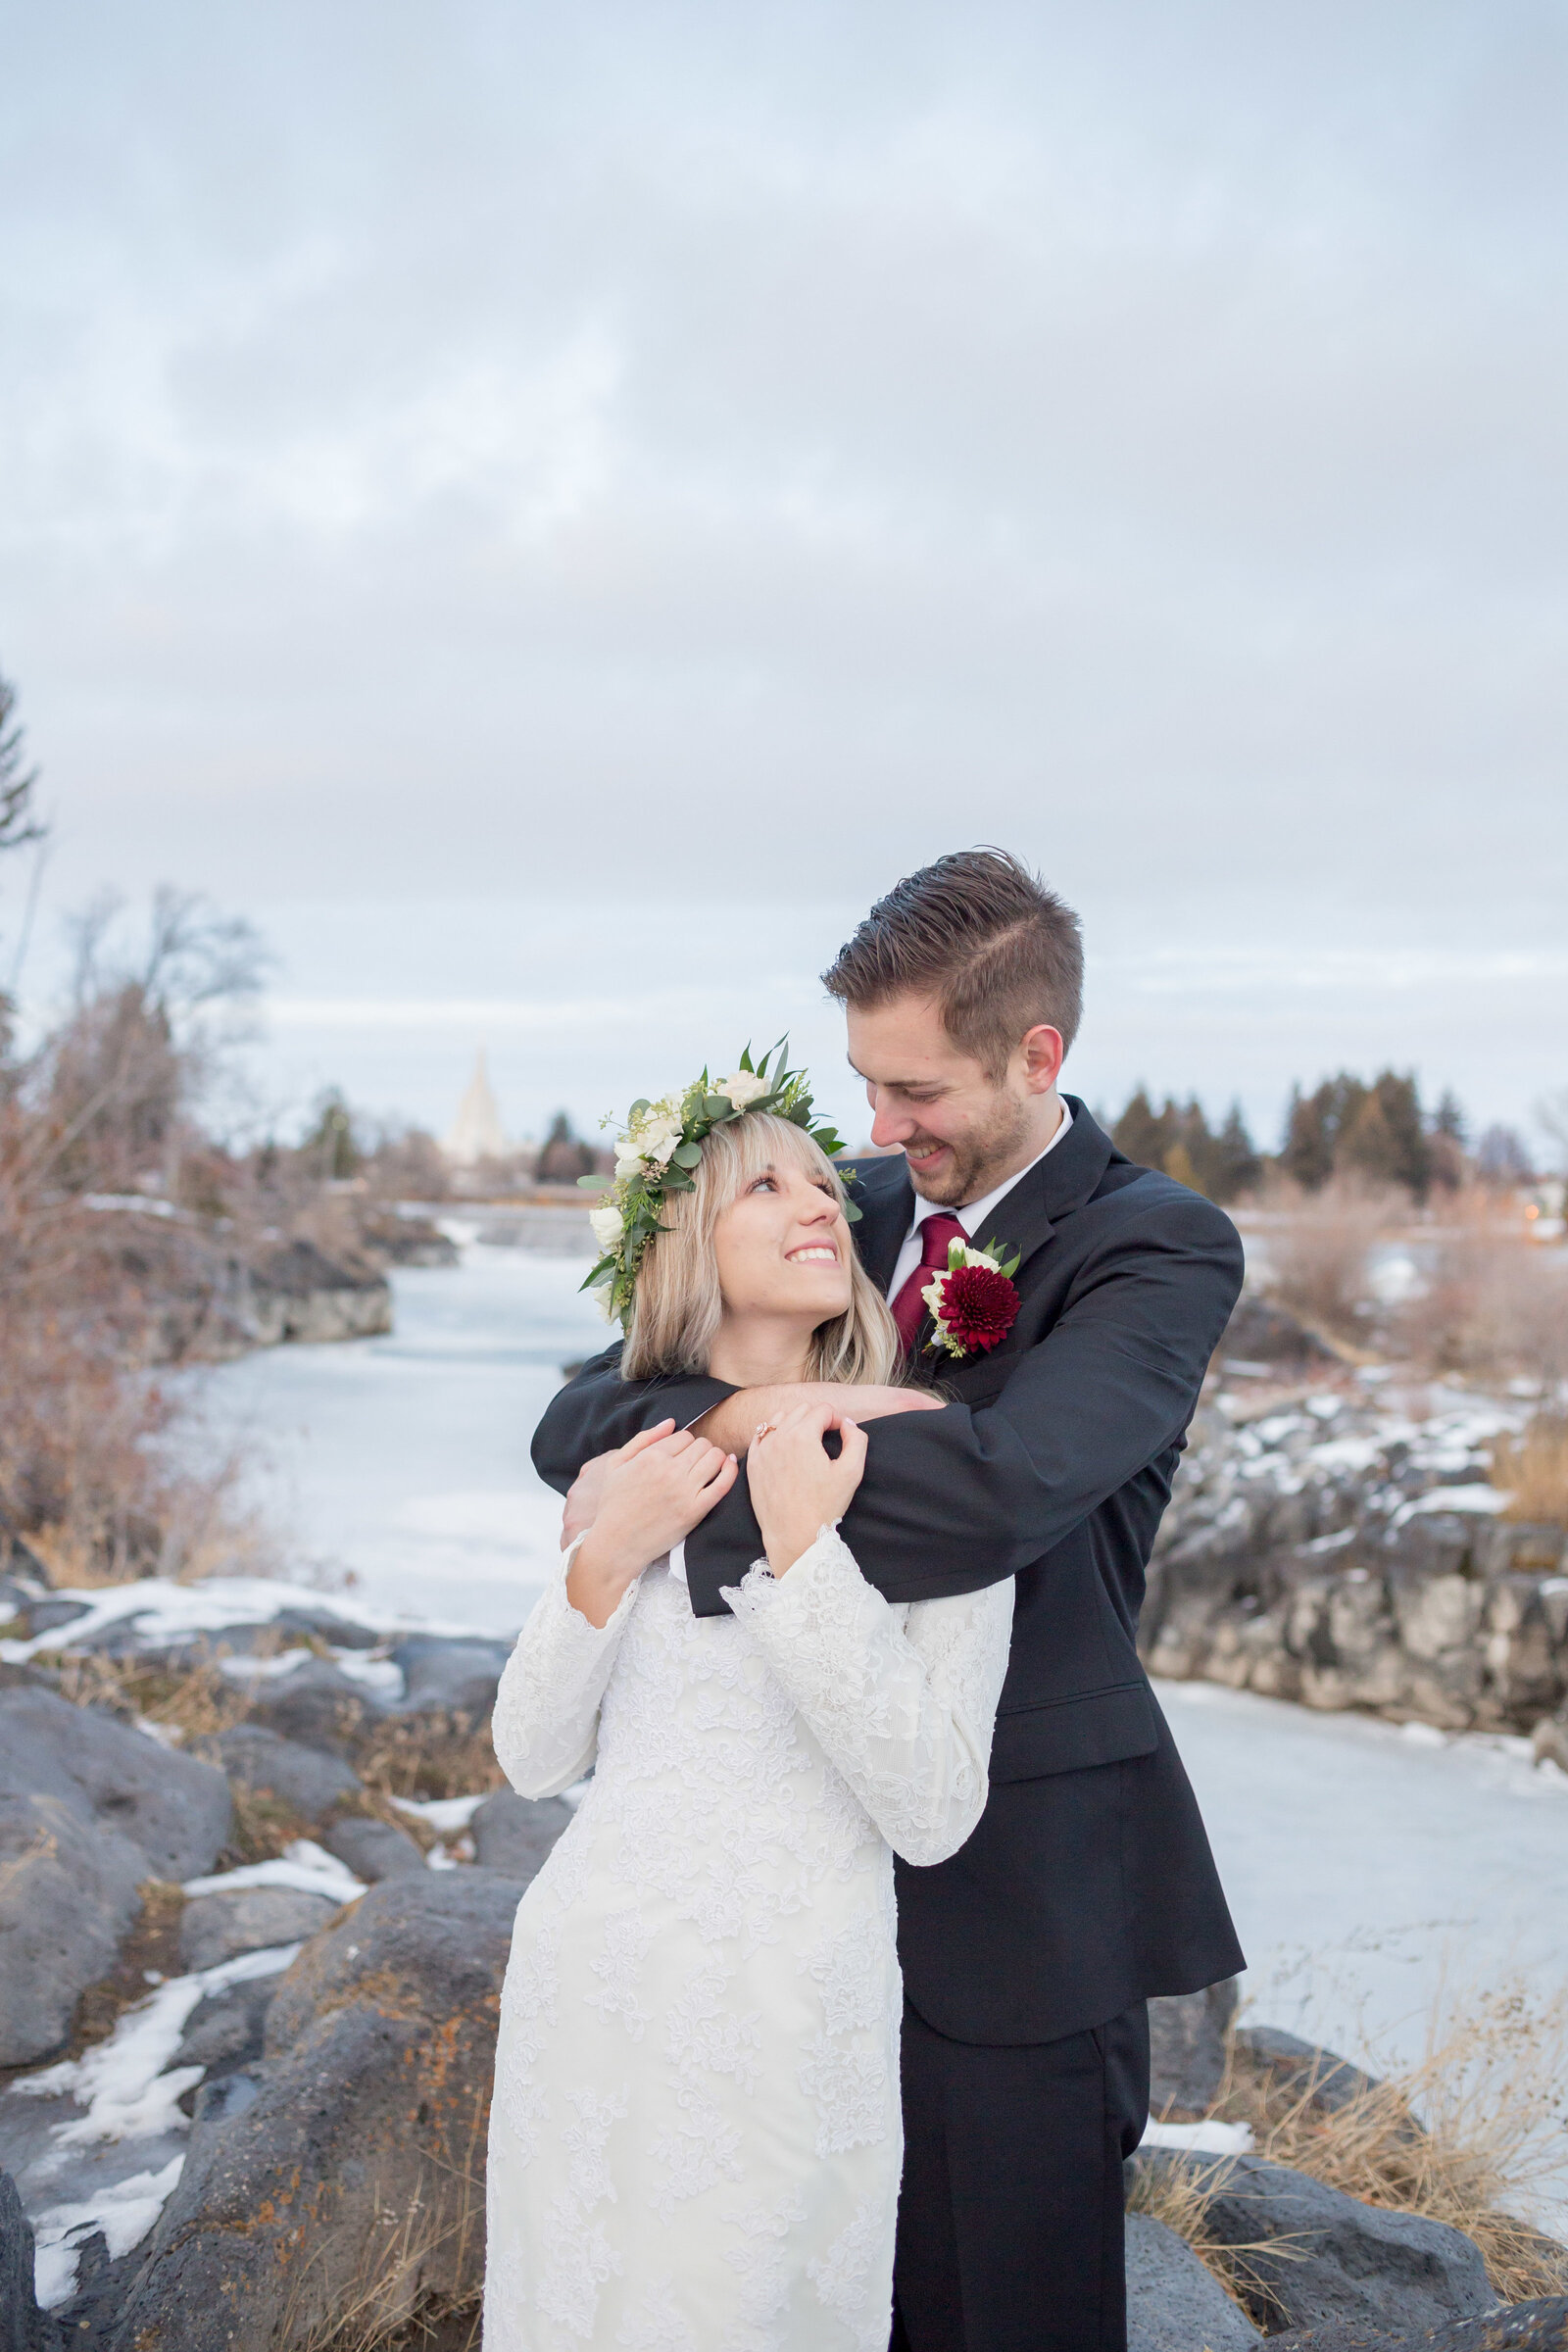 Idaho Wedding Photographer captures spring wedding of couple embracing